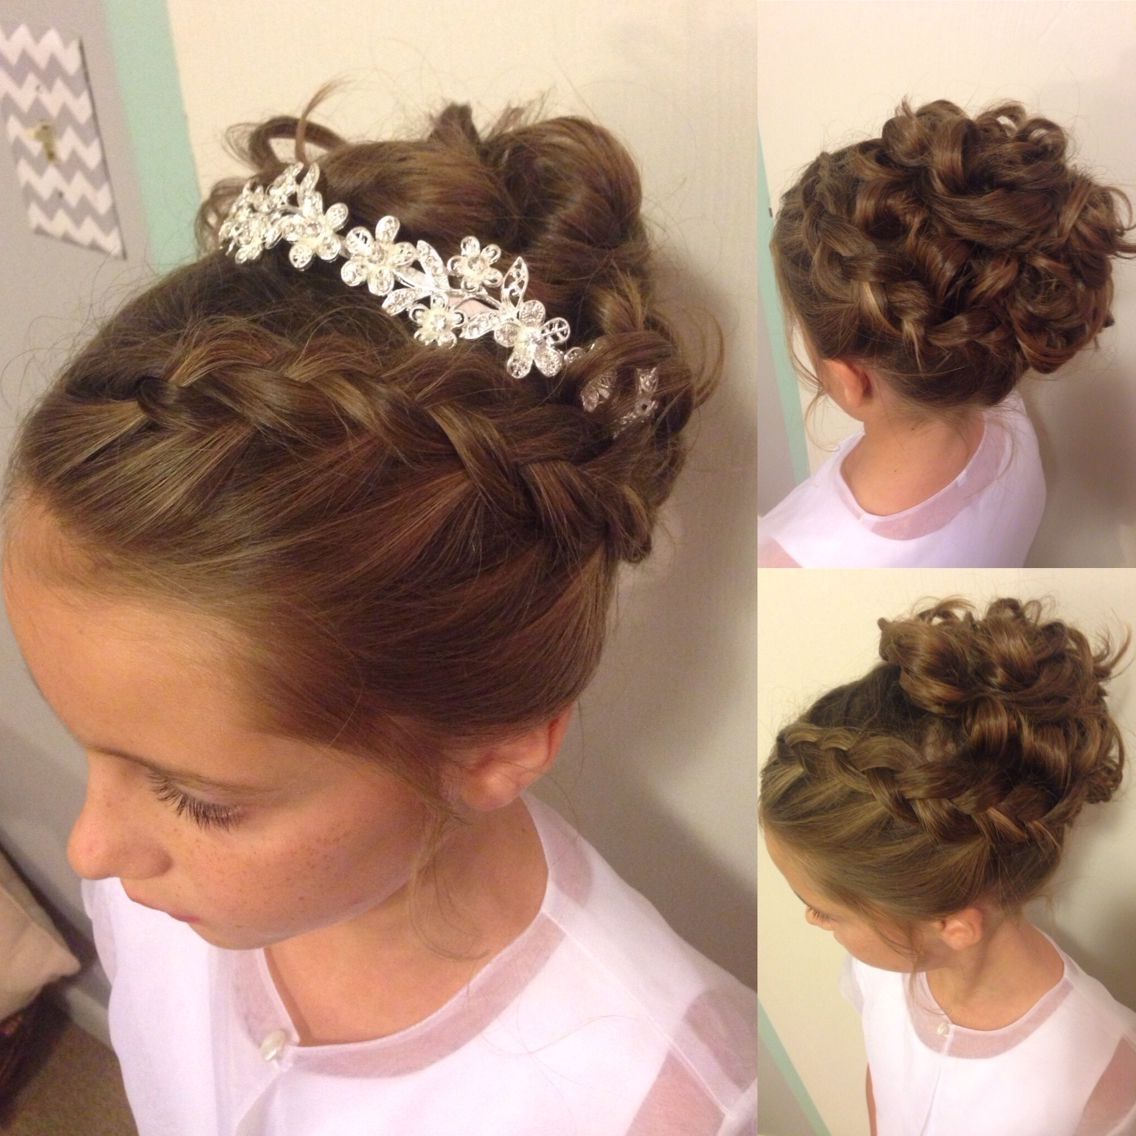 Pinmary Rose On My Work | Pinterest | Updo, Weddings And Girls Inside Little Girl Updos For Short Hair (View 4 of 15)